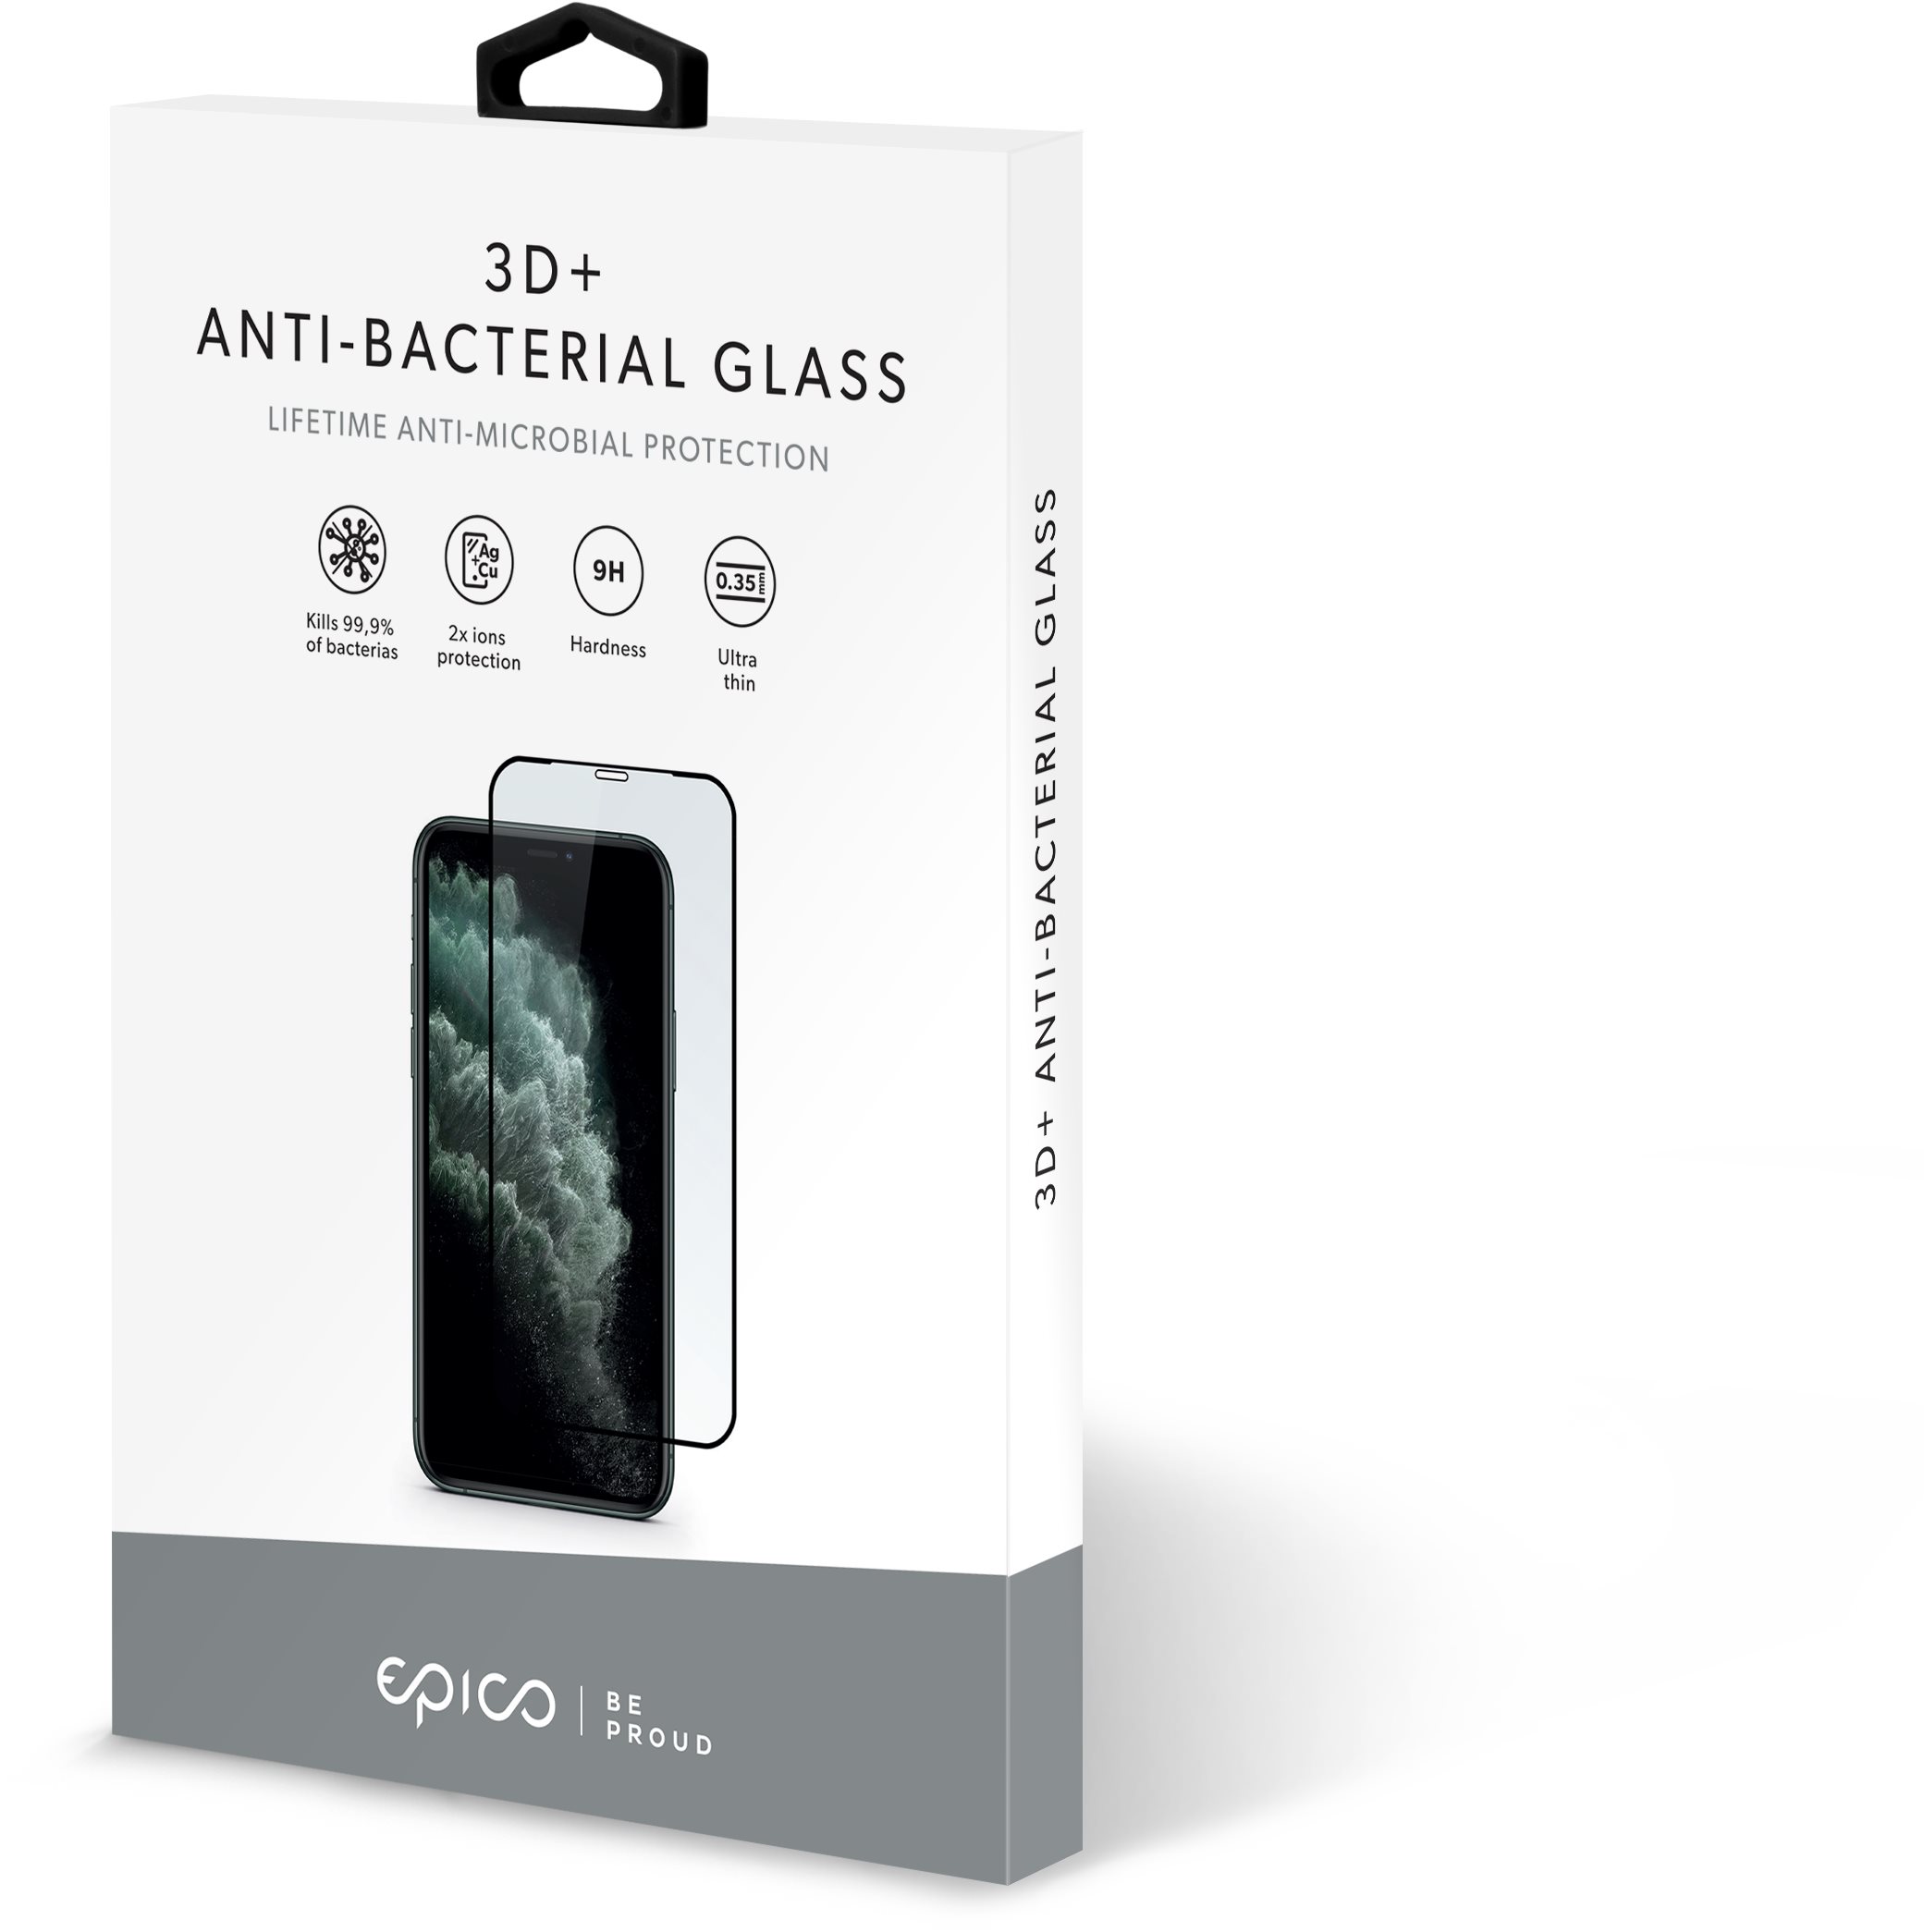 Epico Anti-Bacterial Glass iPhone X/ XS/ 11 Pro 3D+ üvegfólia - fekete